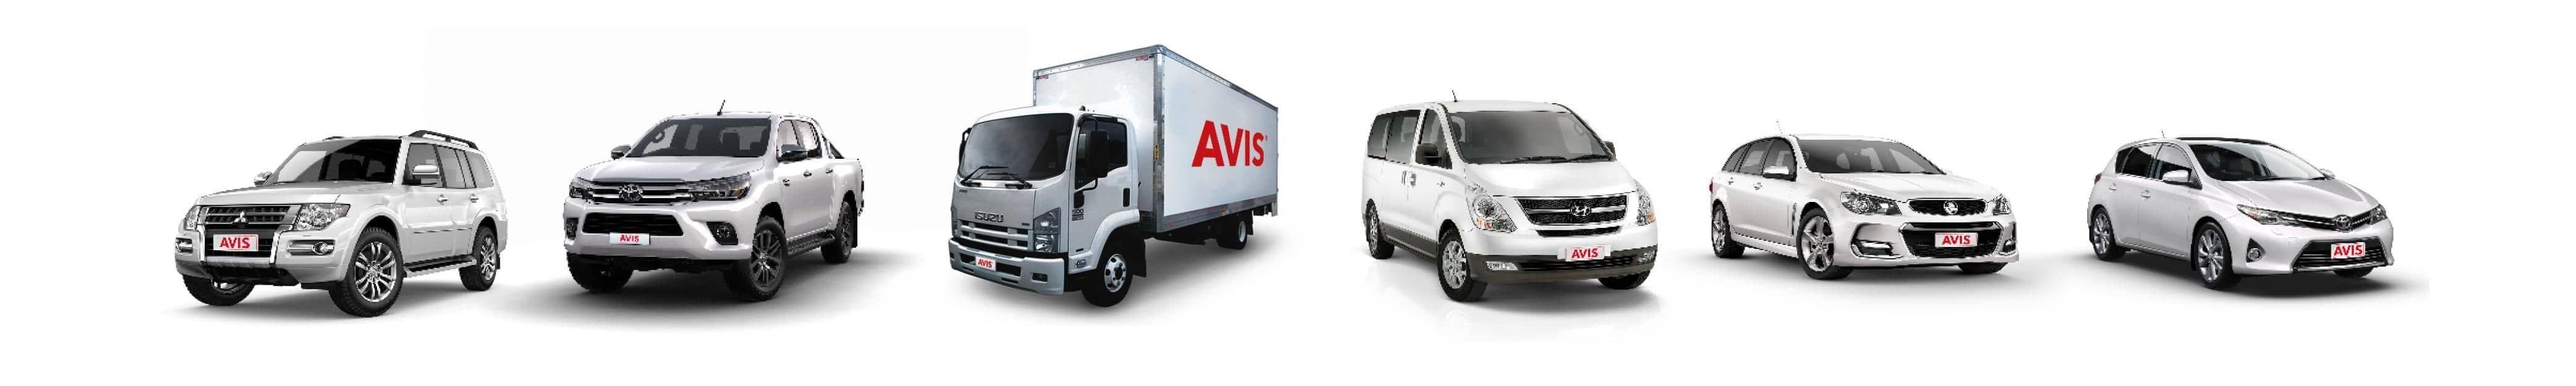 avis-au-businesssolutions-truck2